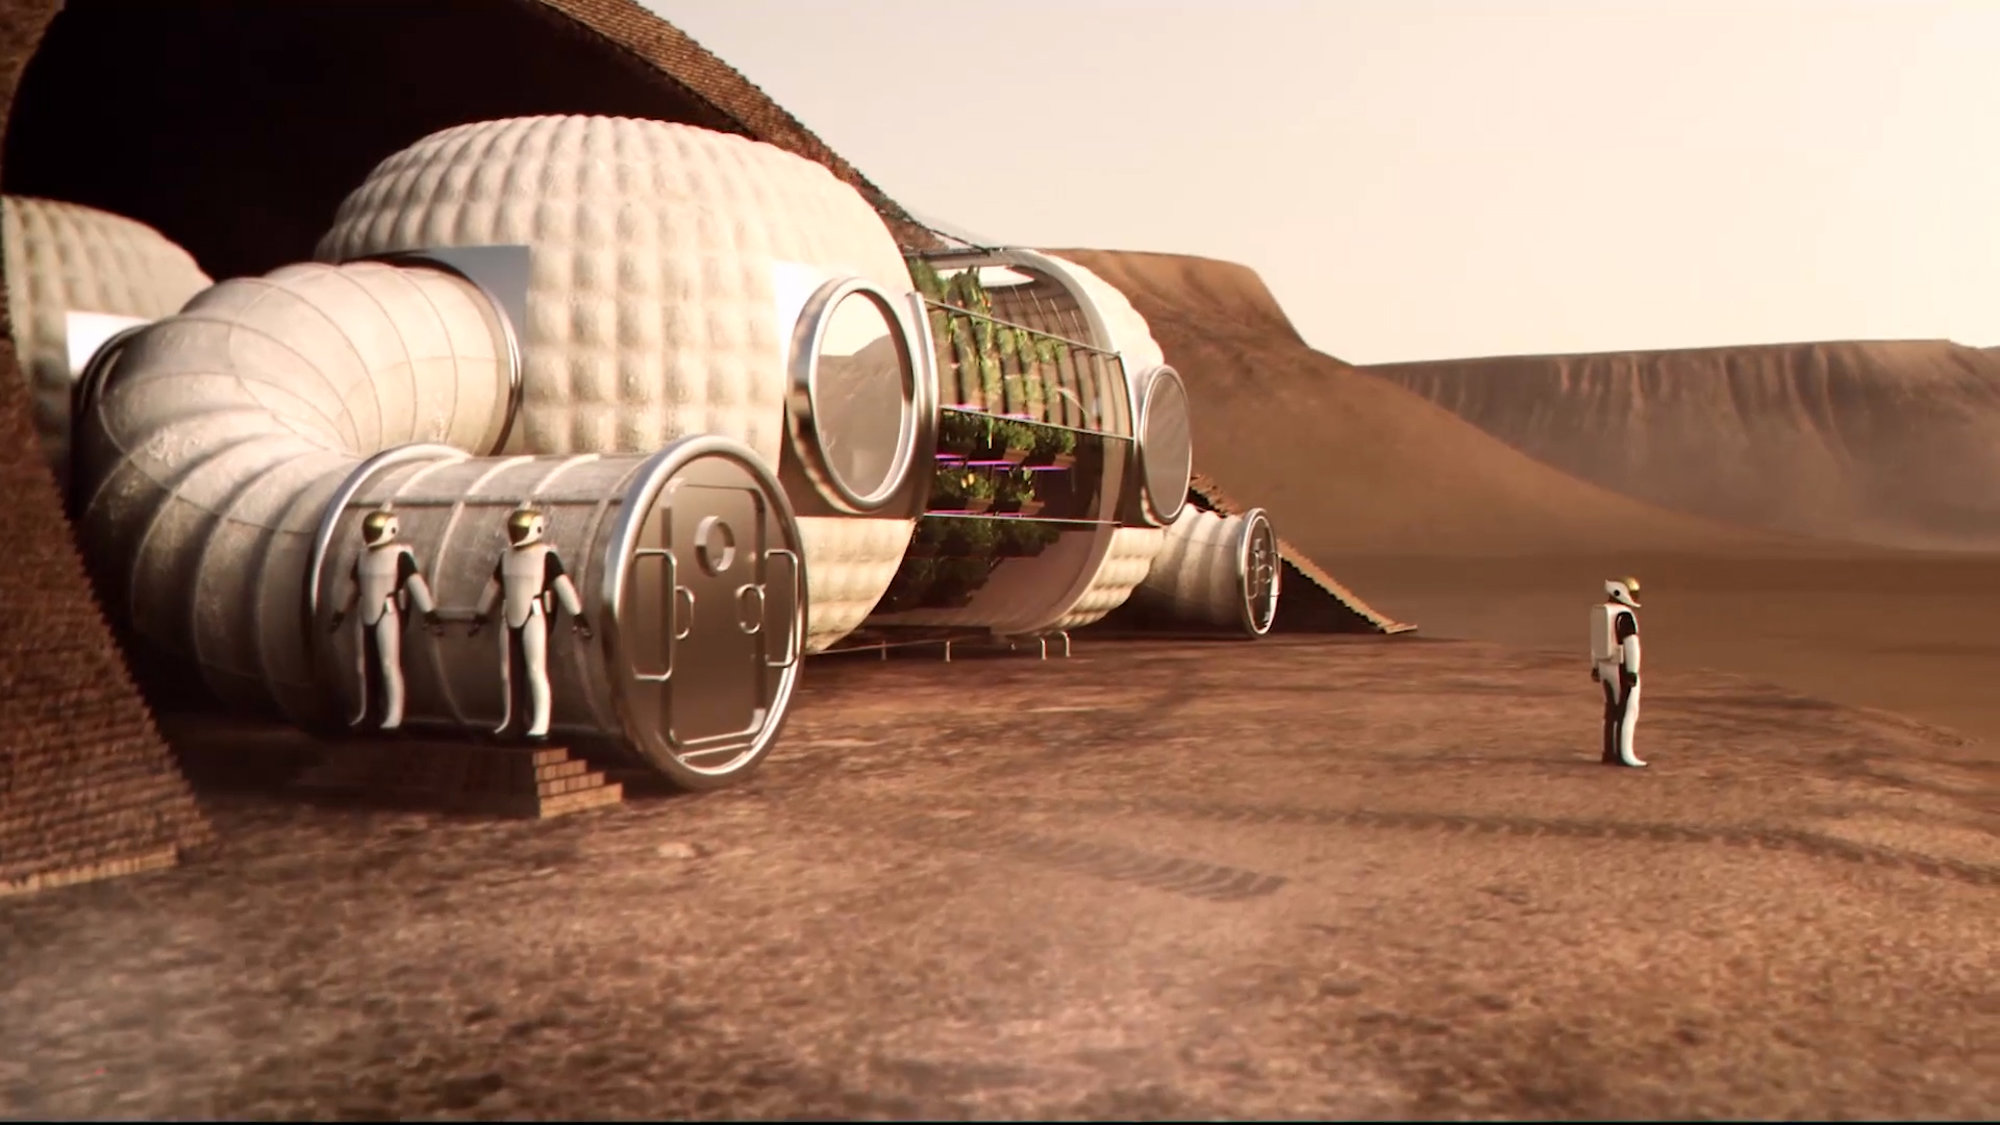 Mars Habitat  Architecture Projects